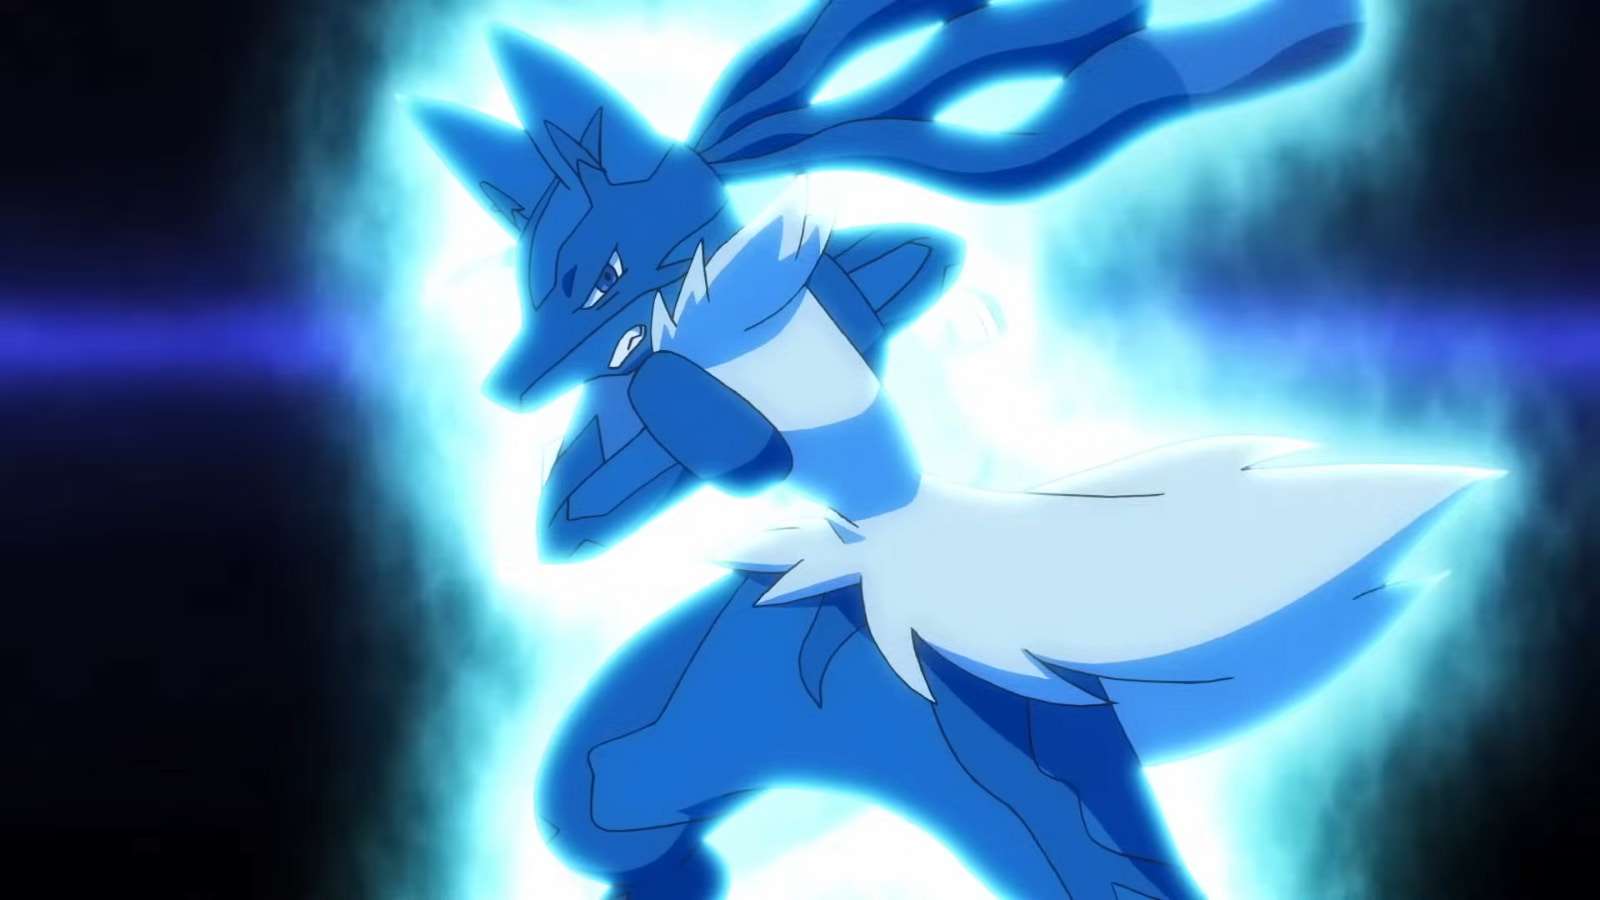 Mega Lucario using Aura Sphere in the Pokemon anime